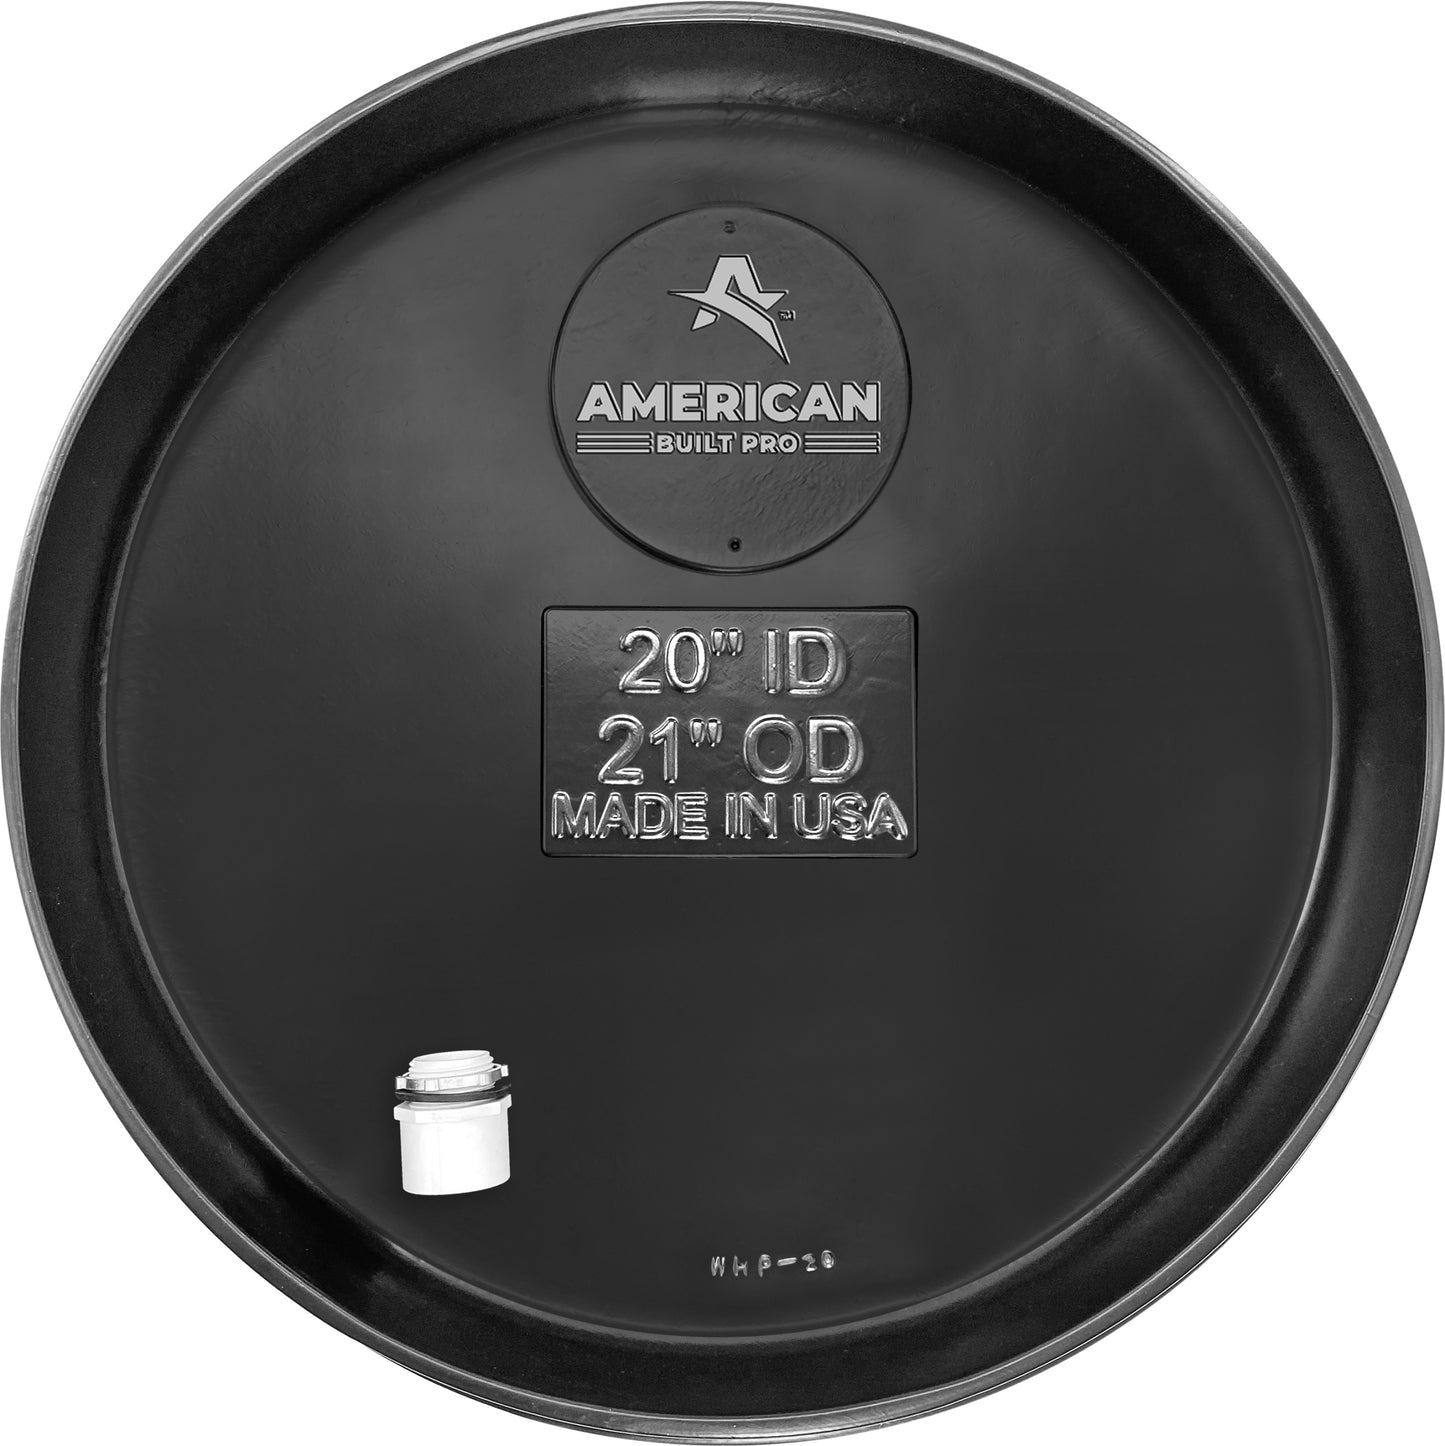 Undrilled Plastic Water Heater Pan incl drainhose adapter